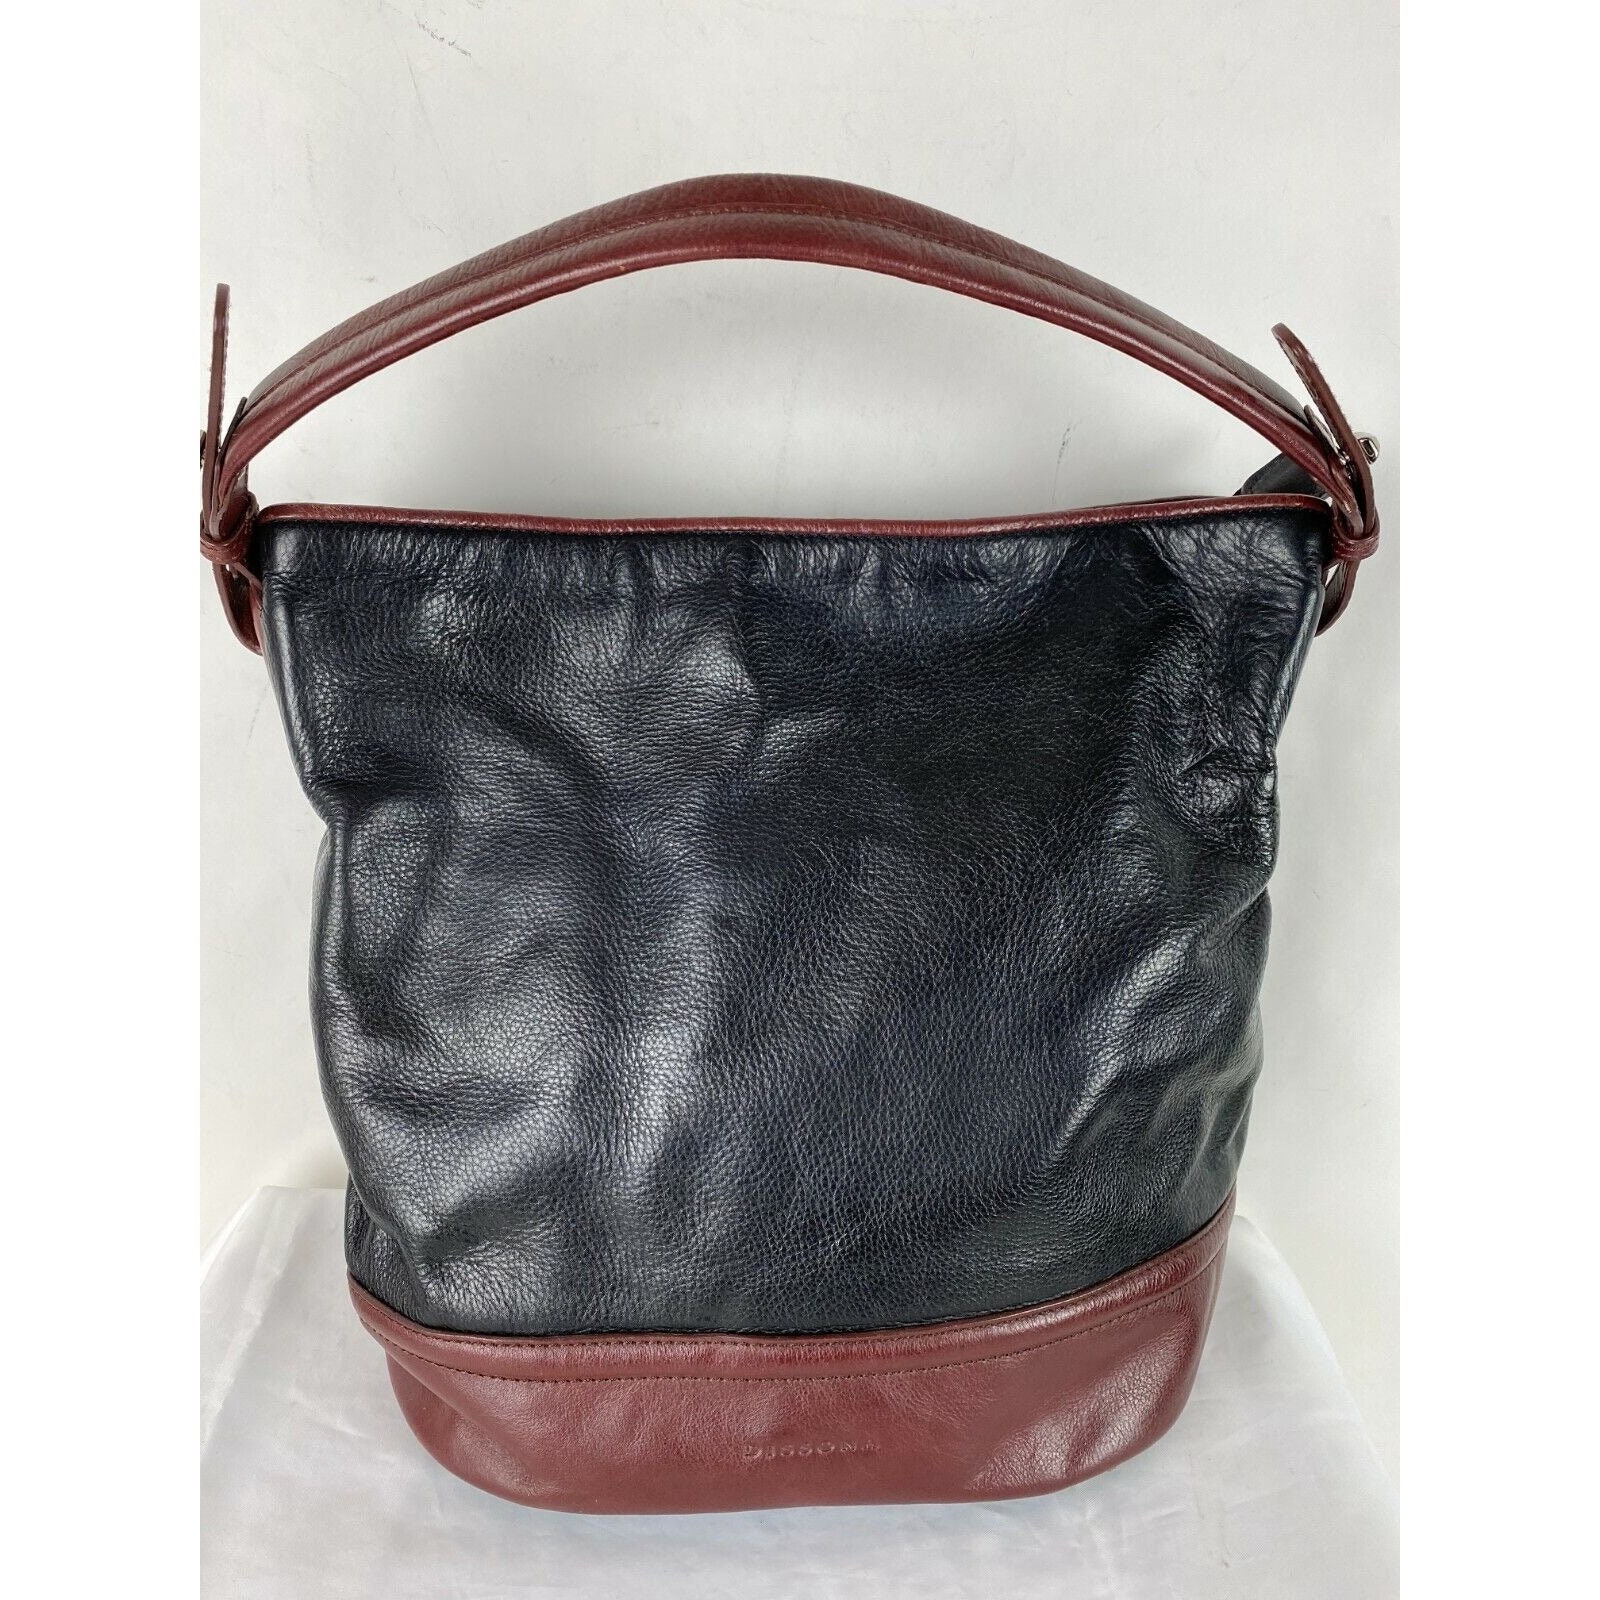 Dissona 100% Leather Solid Black Leather Shoulder Bag One Size